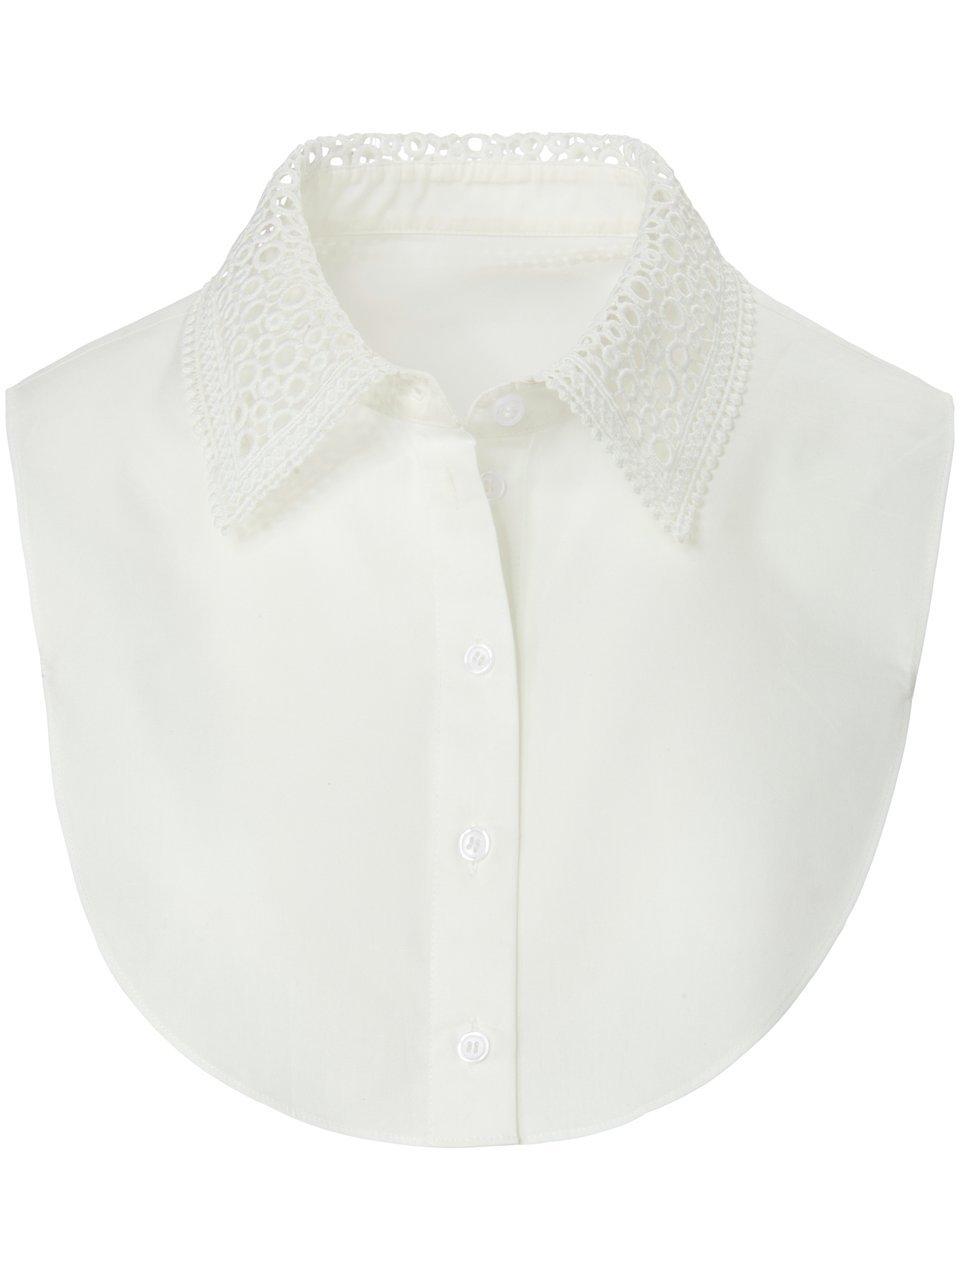 Image of Blouse collar in 100% cotton Uta Raasch white